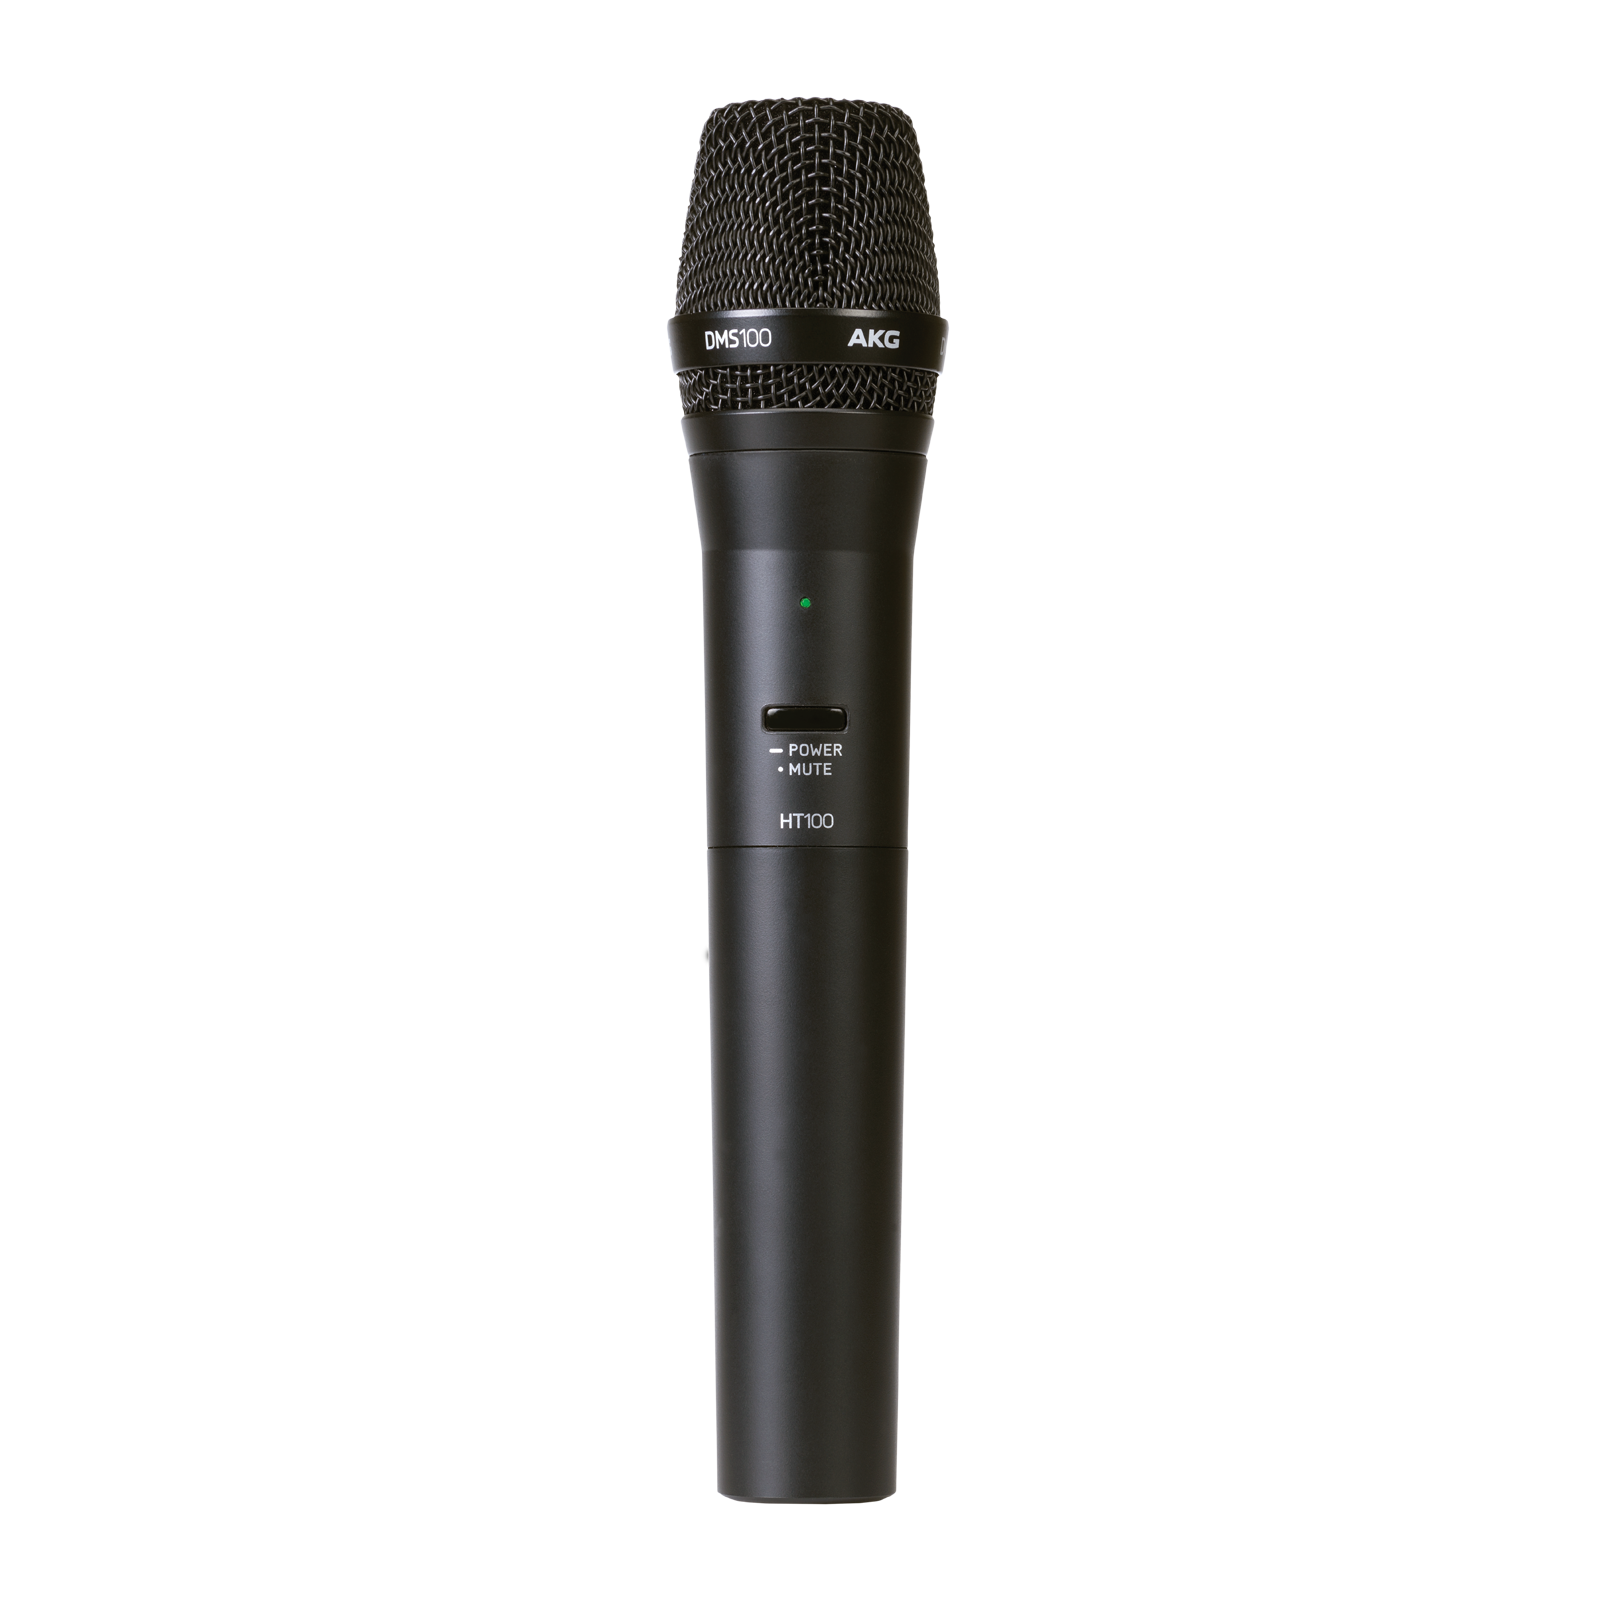 DMS100 Microphone Set - Black - Digital wireless microphone system - Detailshot 1